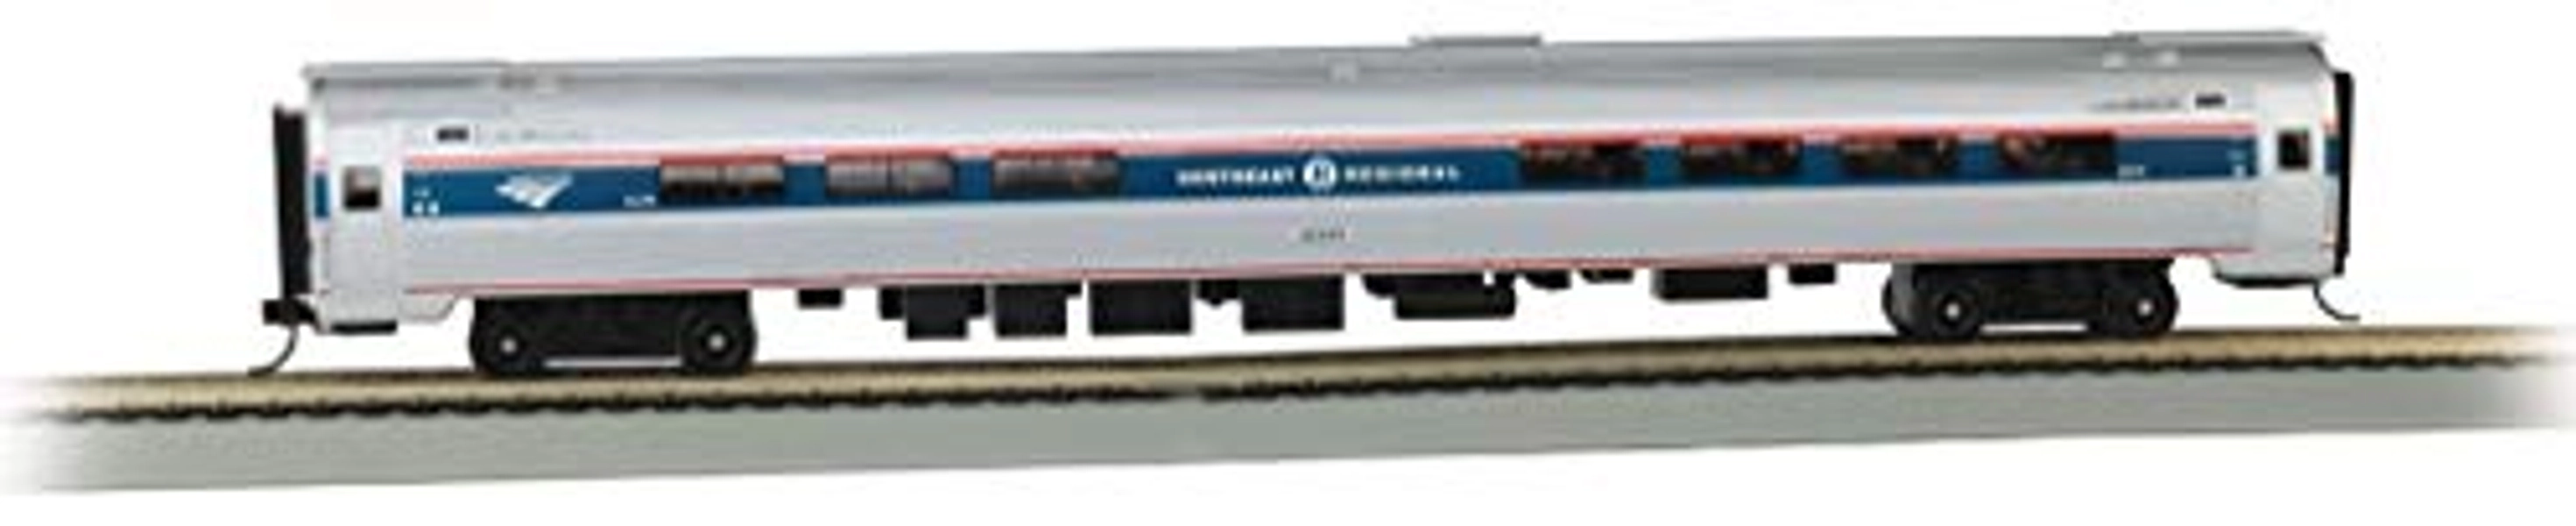 Bachmann Trains - 85' Budd Amtrak AMFLEET - I CAFÉ CAR - Northeast Regional Phase VI #43344 - HO Scale